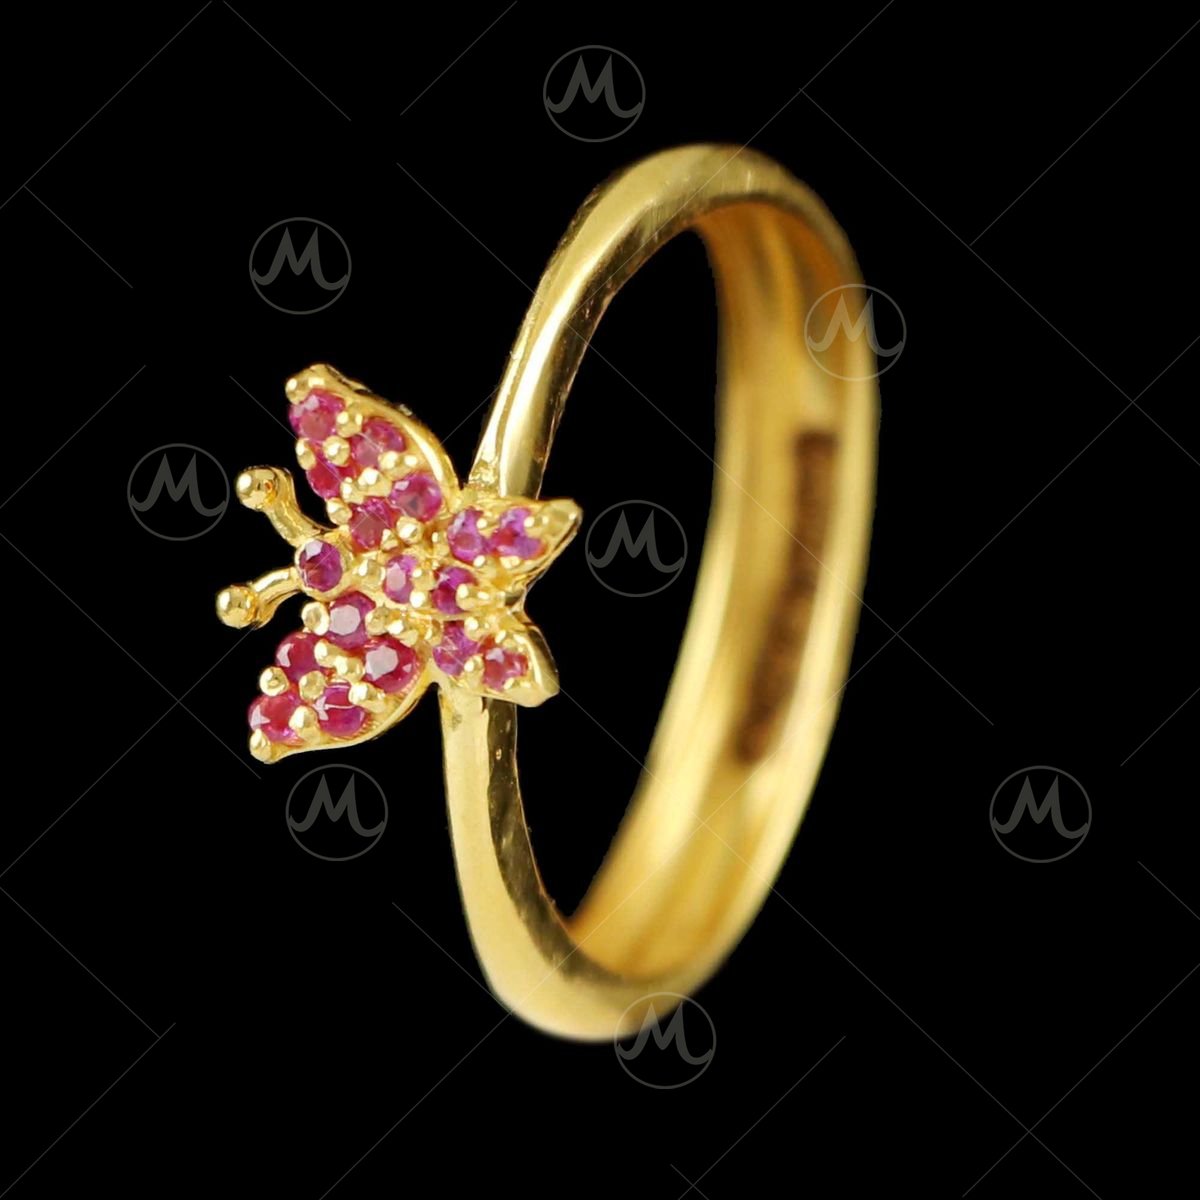 1 Gram Gold Forming Charming Design Premium-Grade Quality Ring for Men -  Style B076 – Soni Fashion®